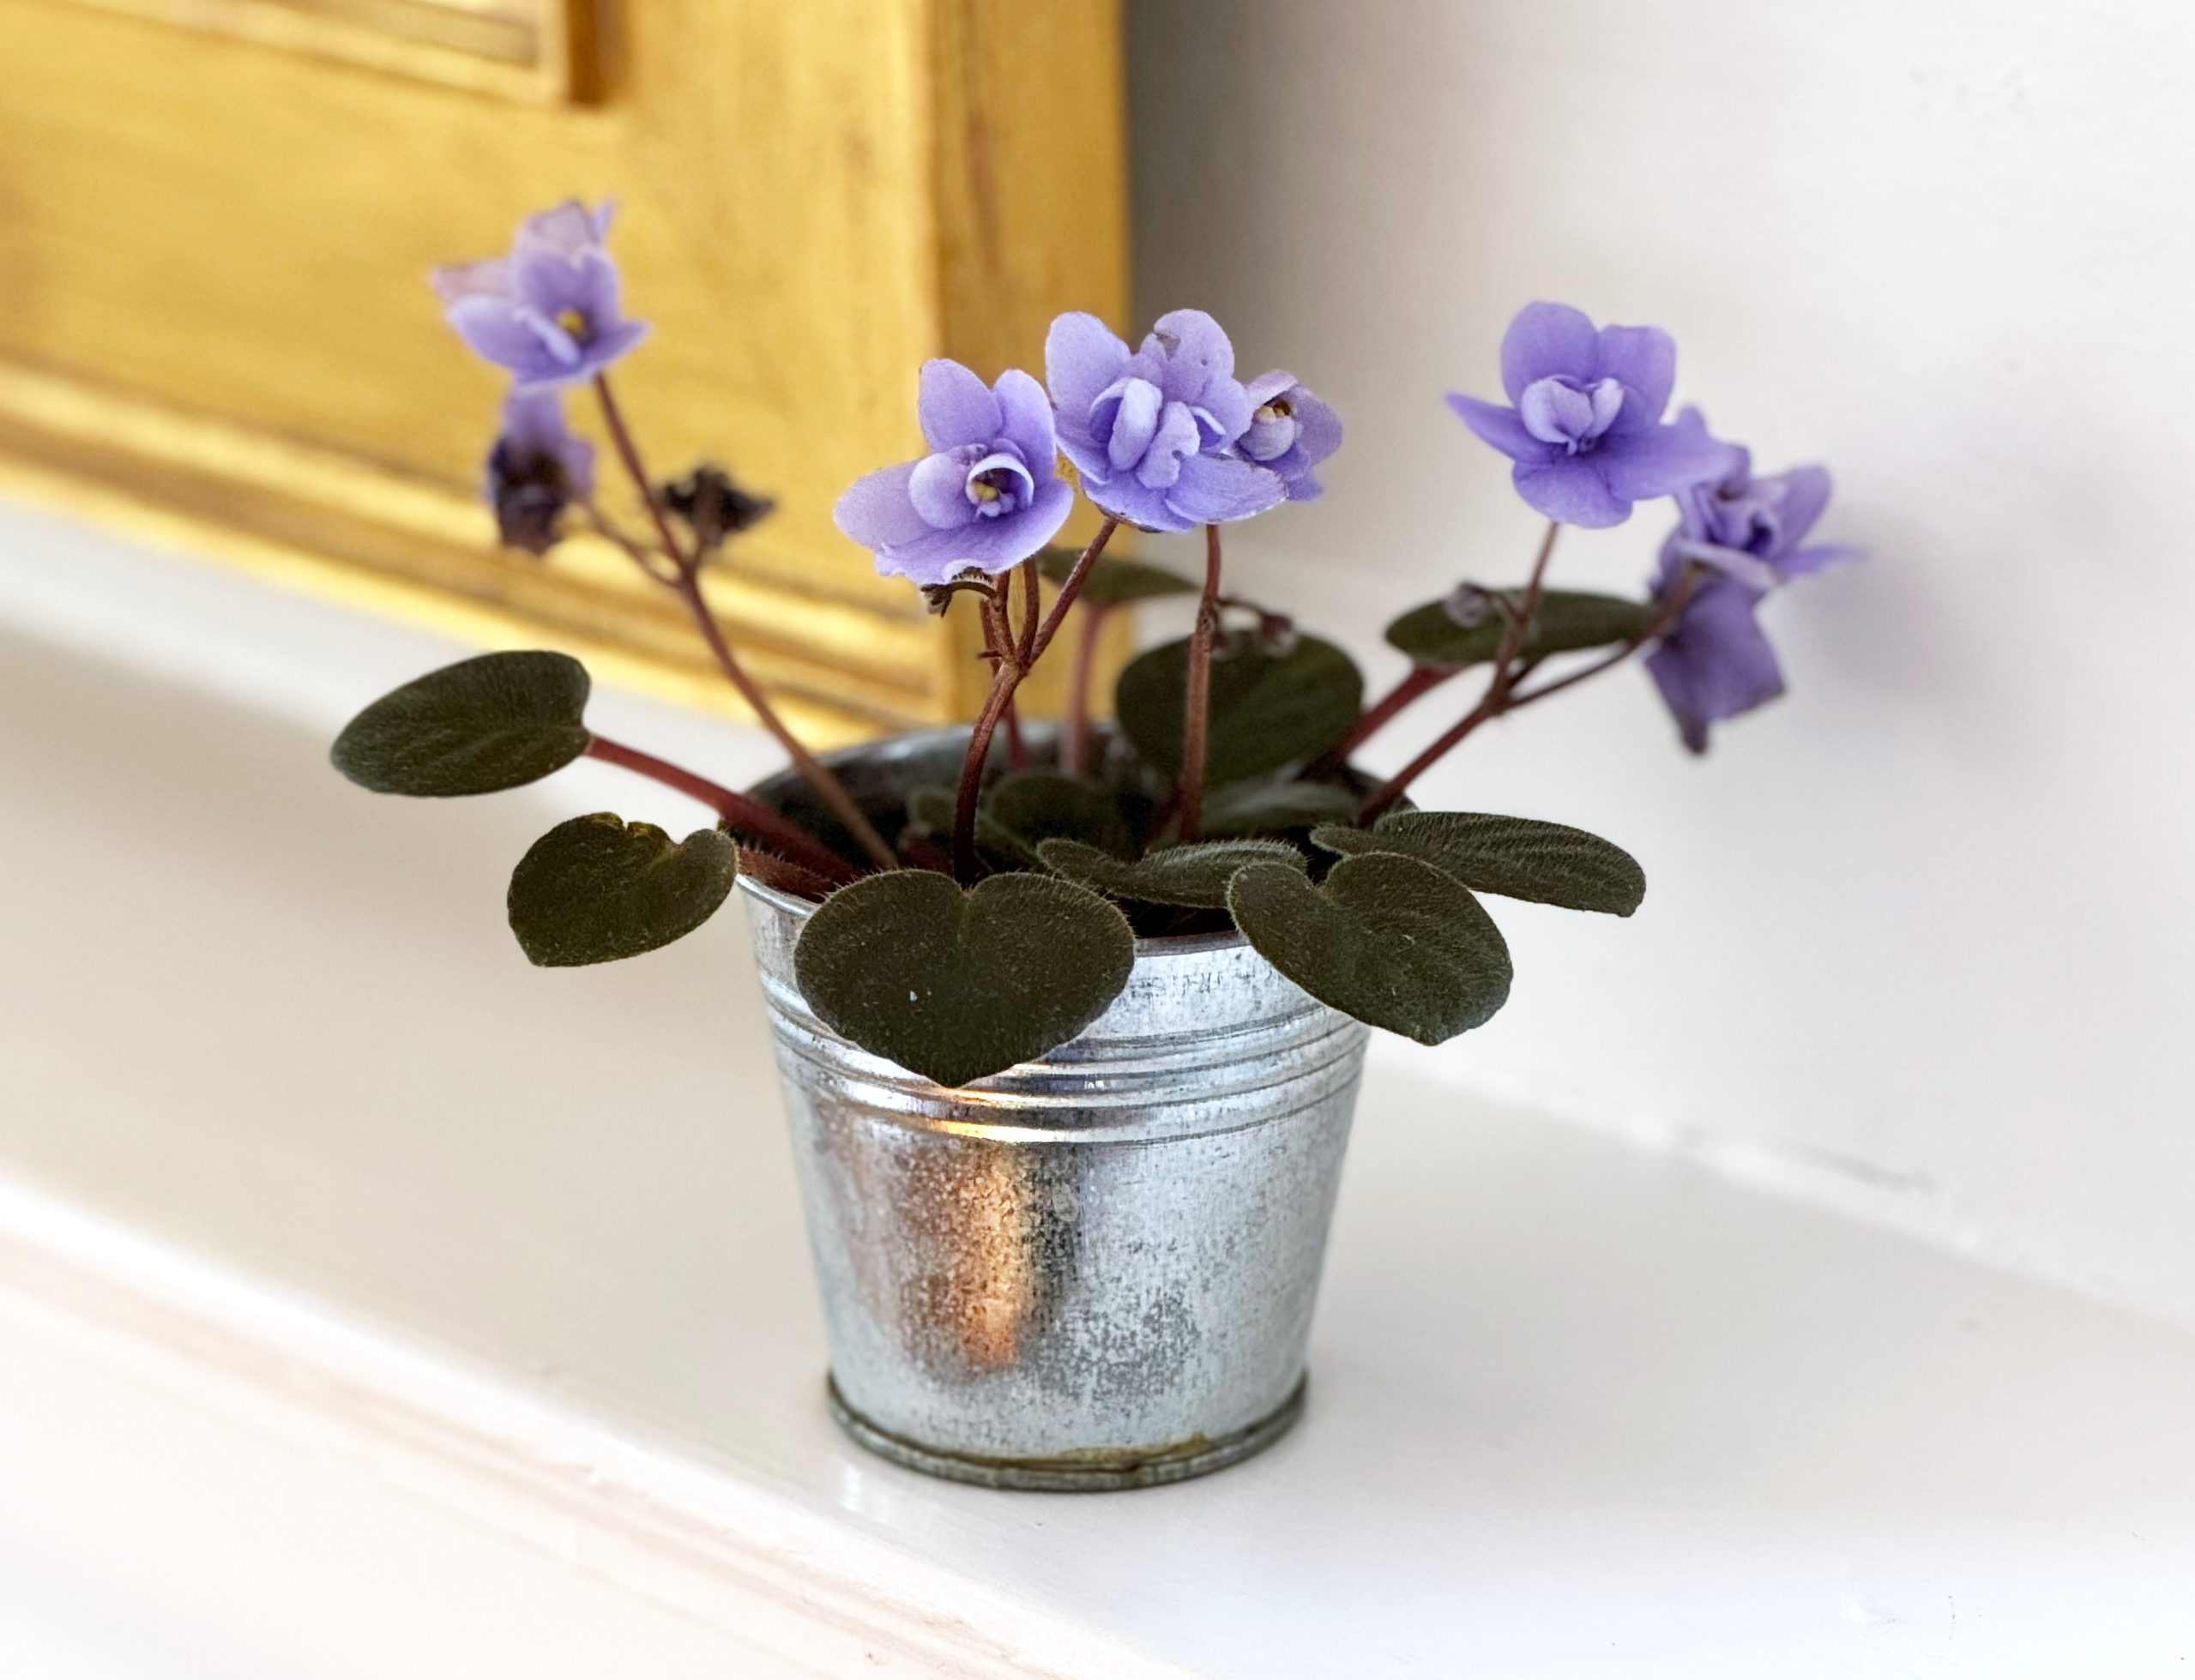 A miniature violet plant in a silver pot